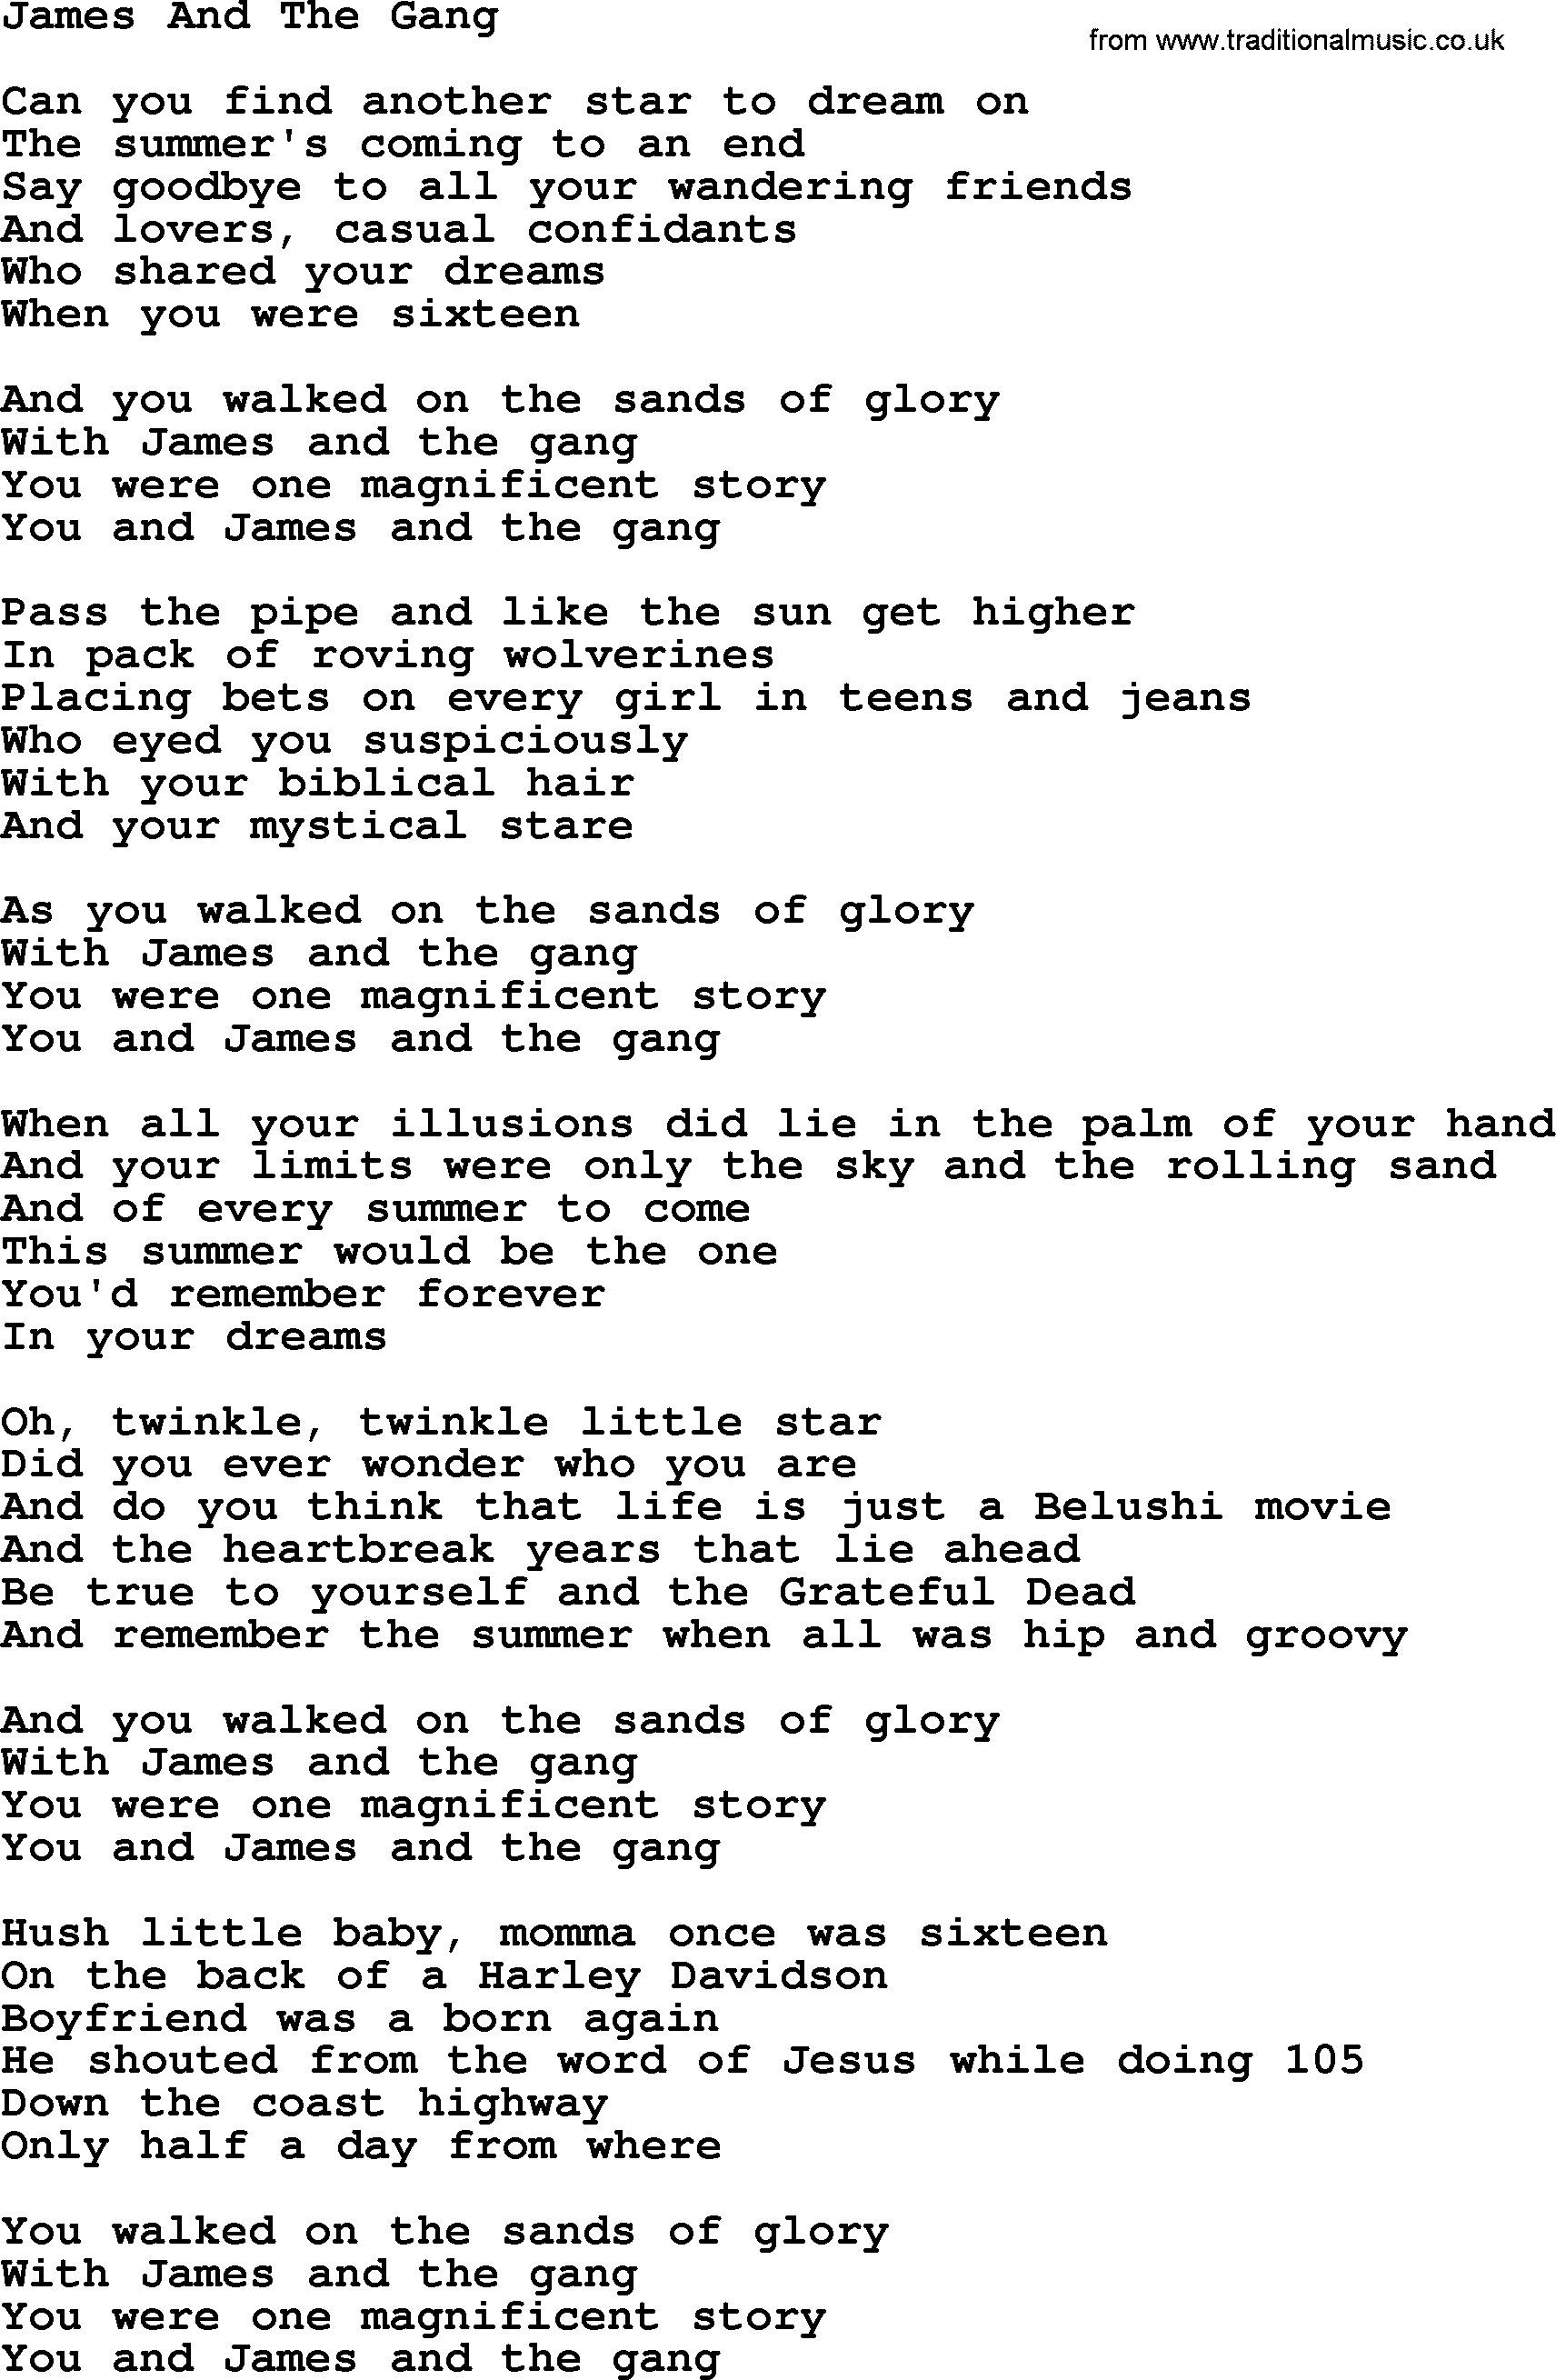 Joan Baez song James And The Gang, lyrics